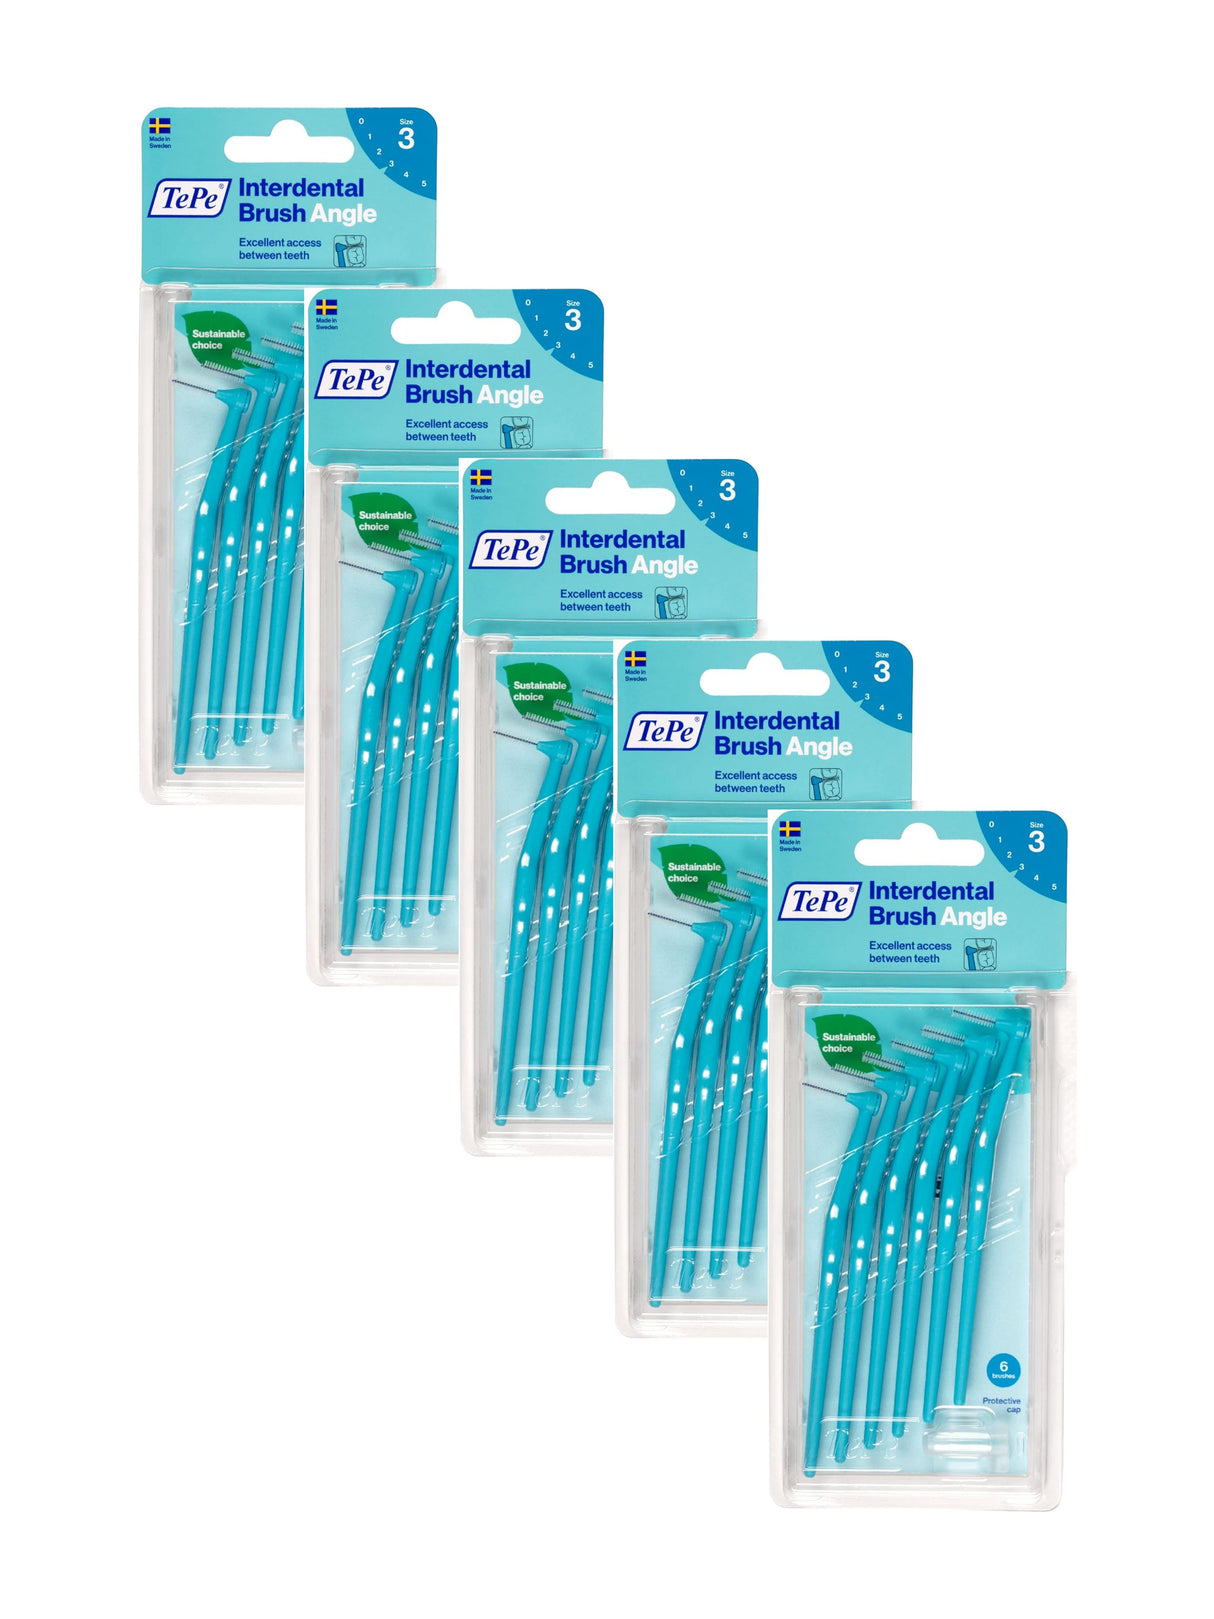 TePe Angle Interdental Brushes Blue 0.6mm (Size 3) 6 Pack - 5 Pack Bundle (30 brushes)